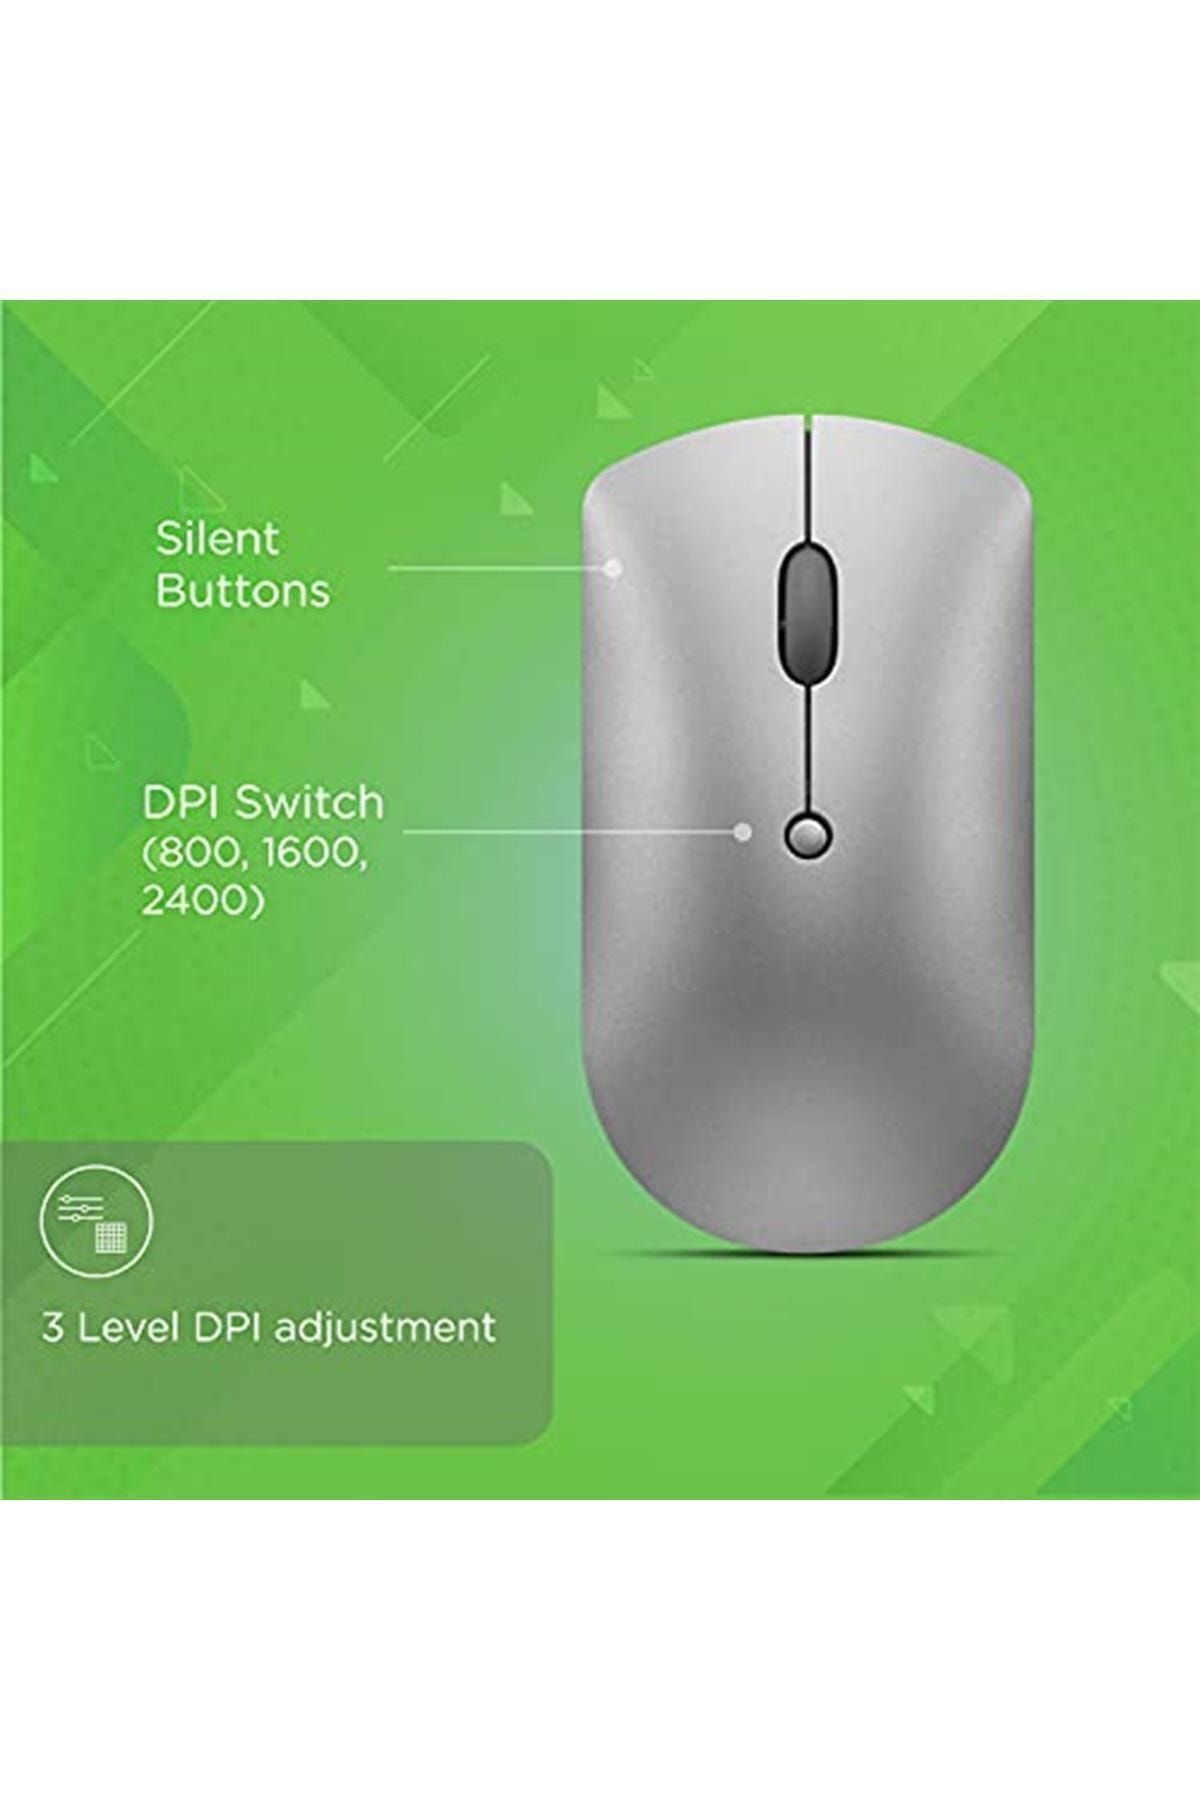 LENOVO Marka: 600 Sessiz Bluetooth Fare, Gri. Kategori: Mouse